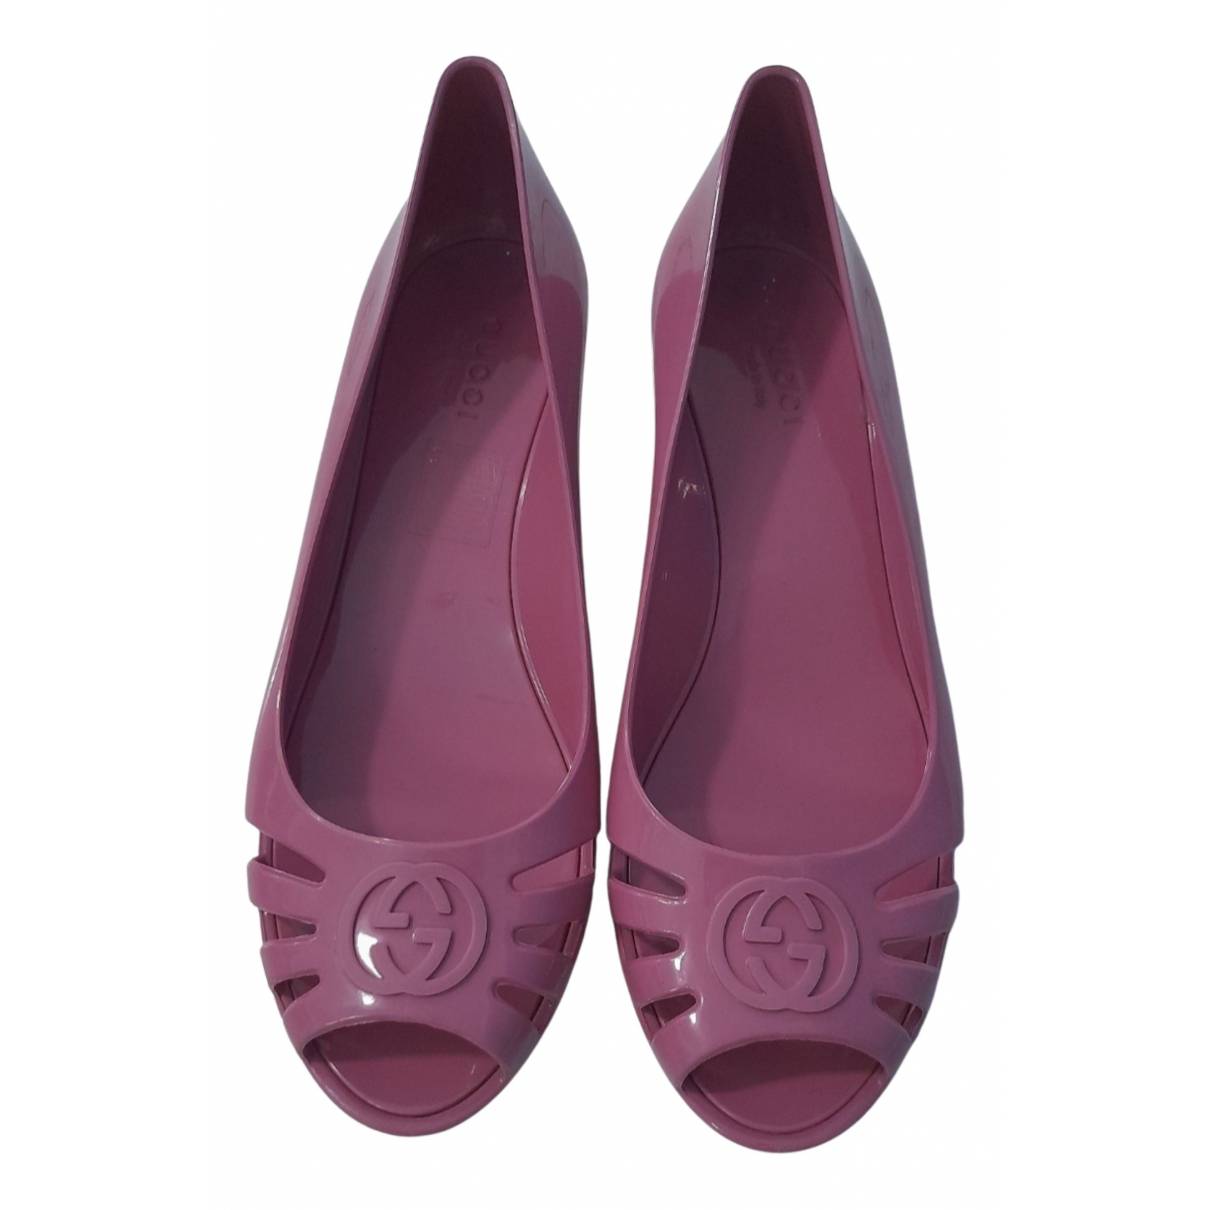 Sandals Gucci Pink size 35 EU in Rubber - 21809684